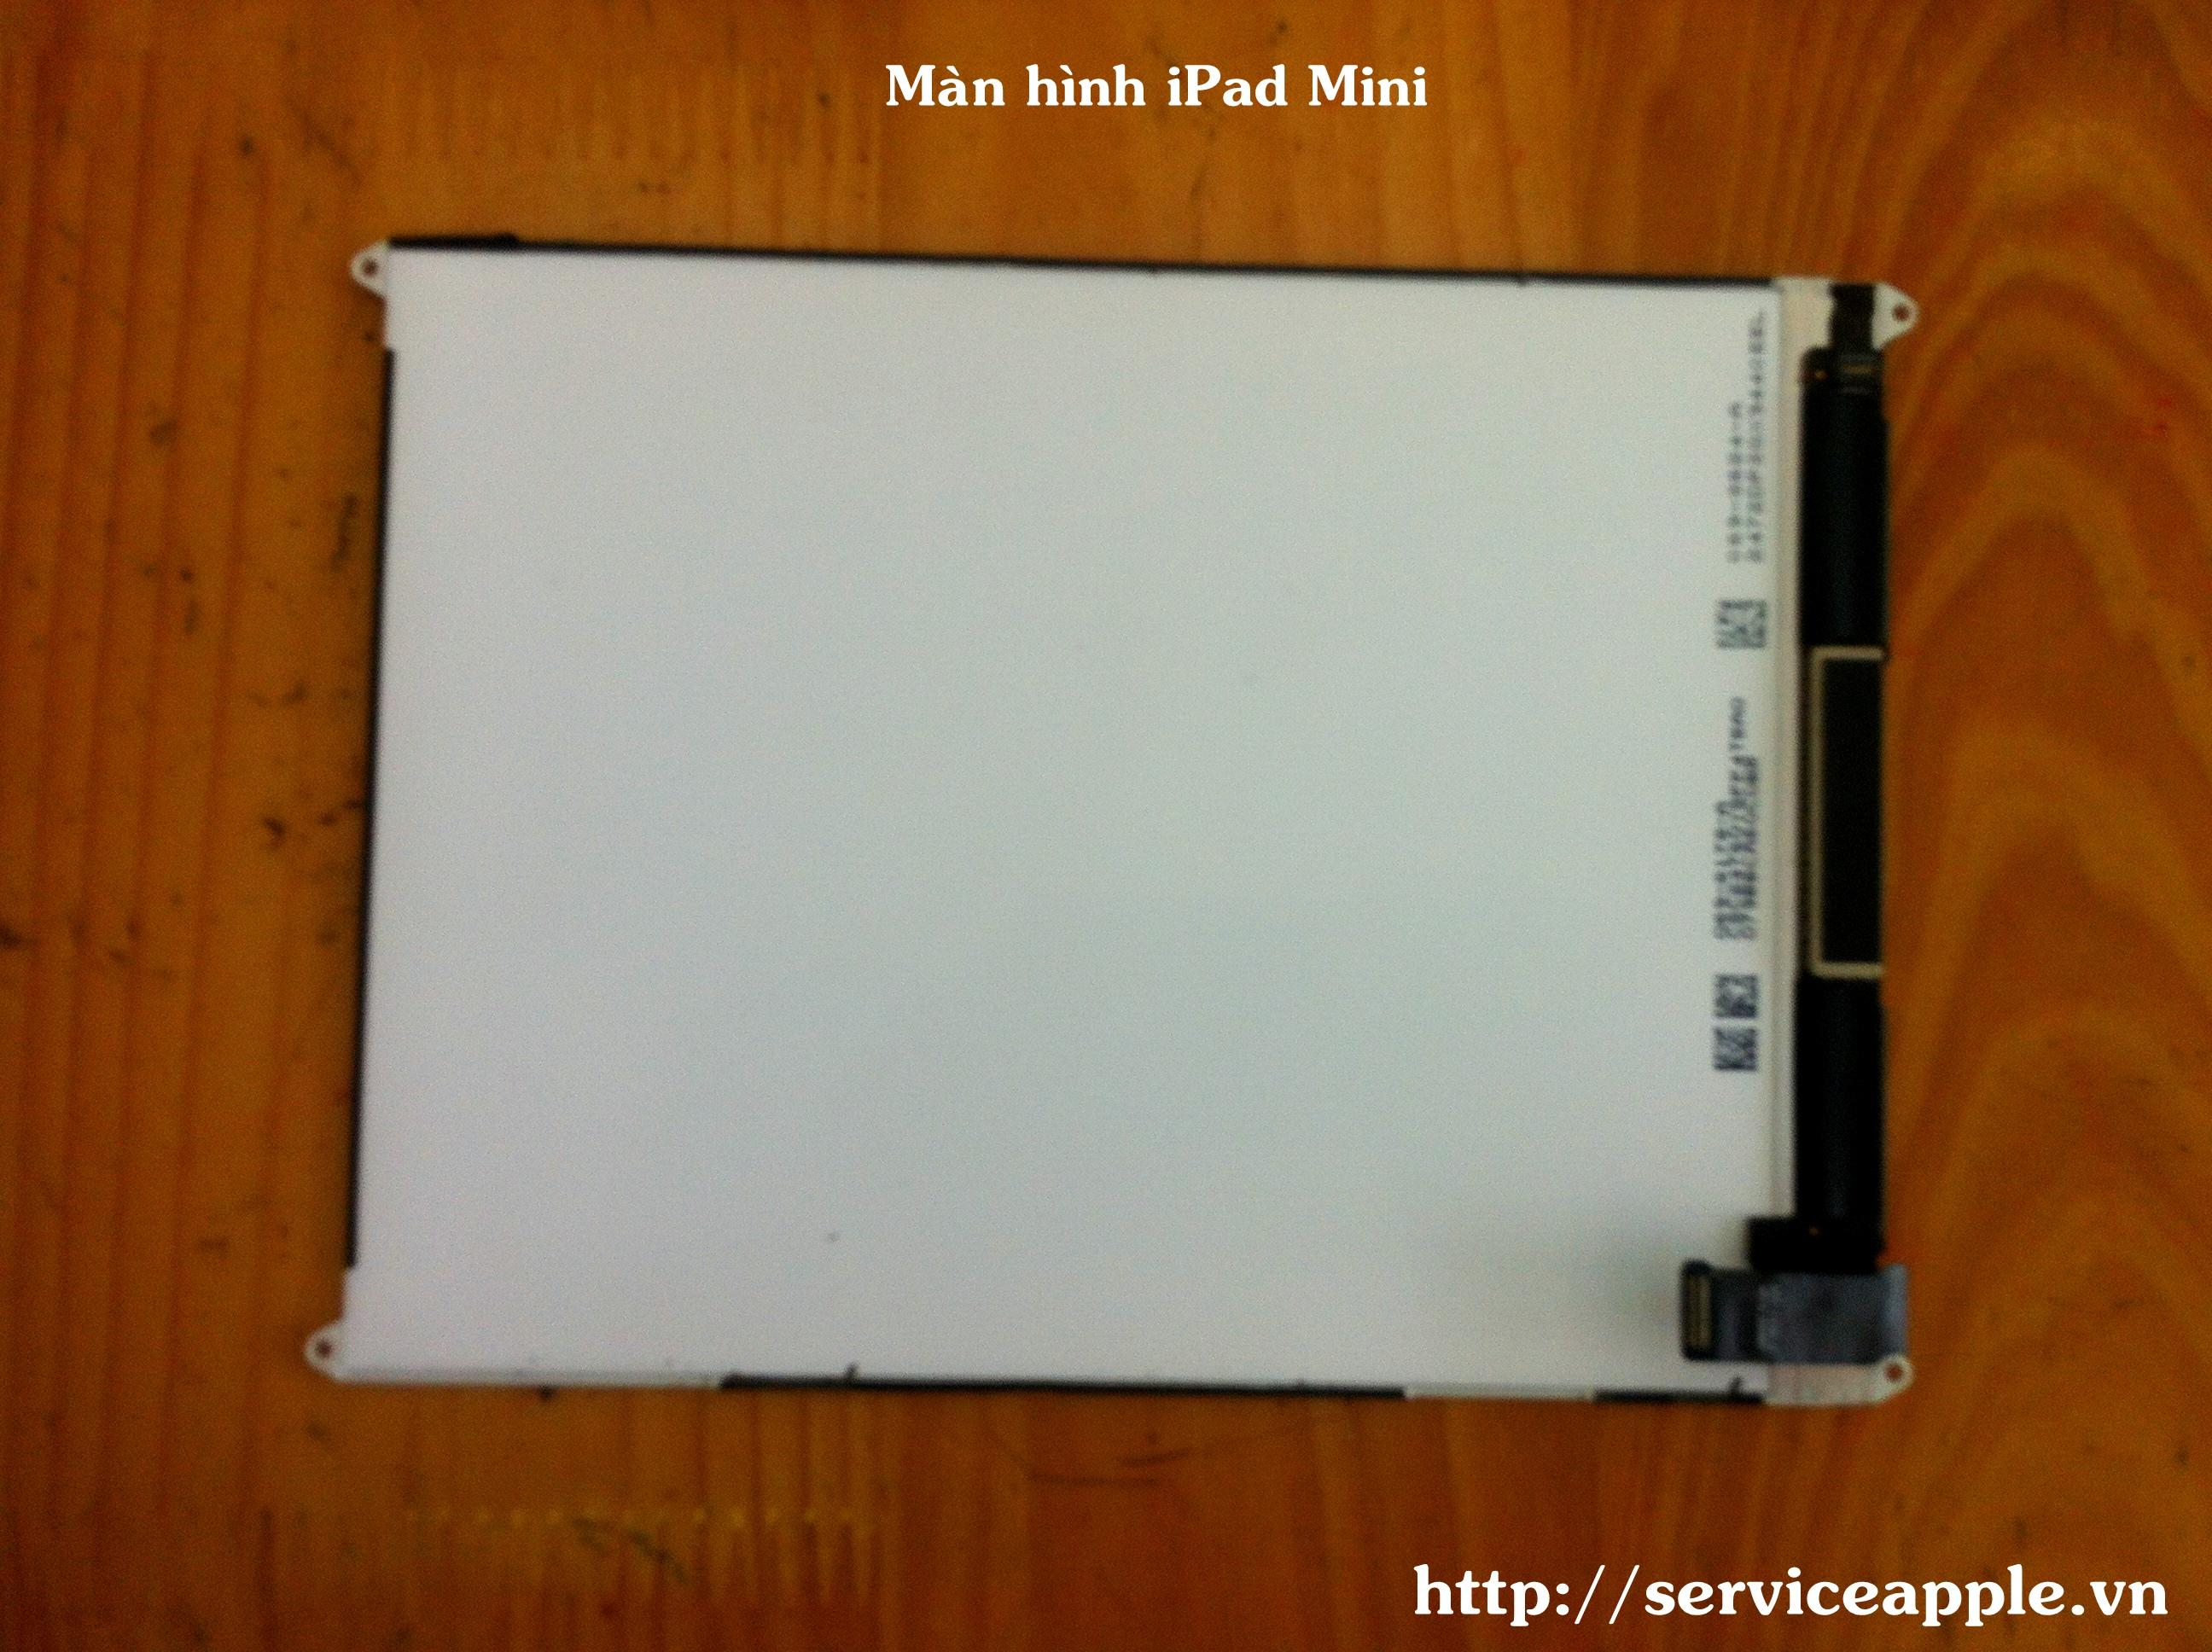 Man hinh iPad Mini.JPG